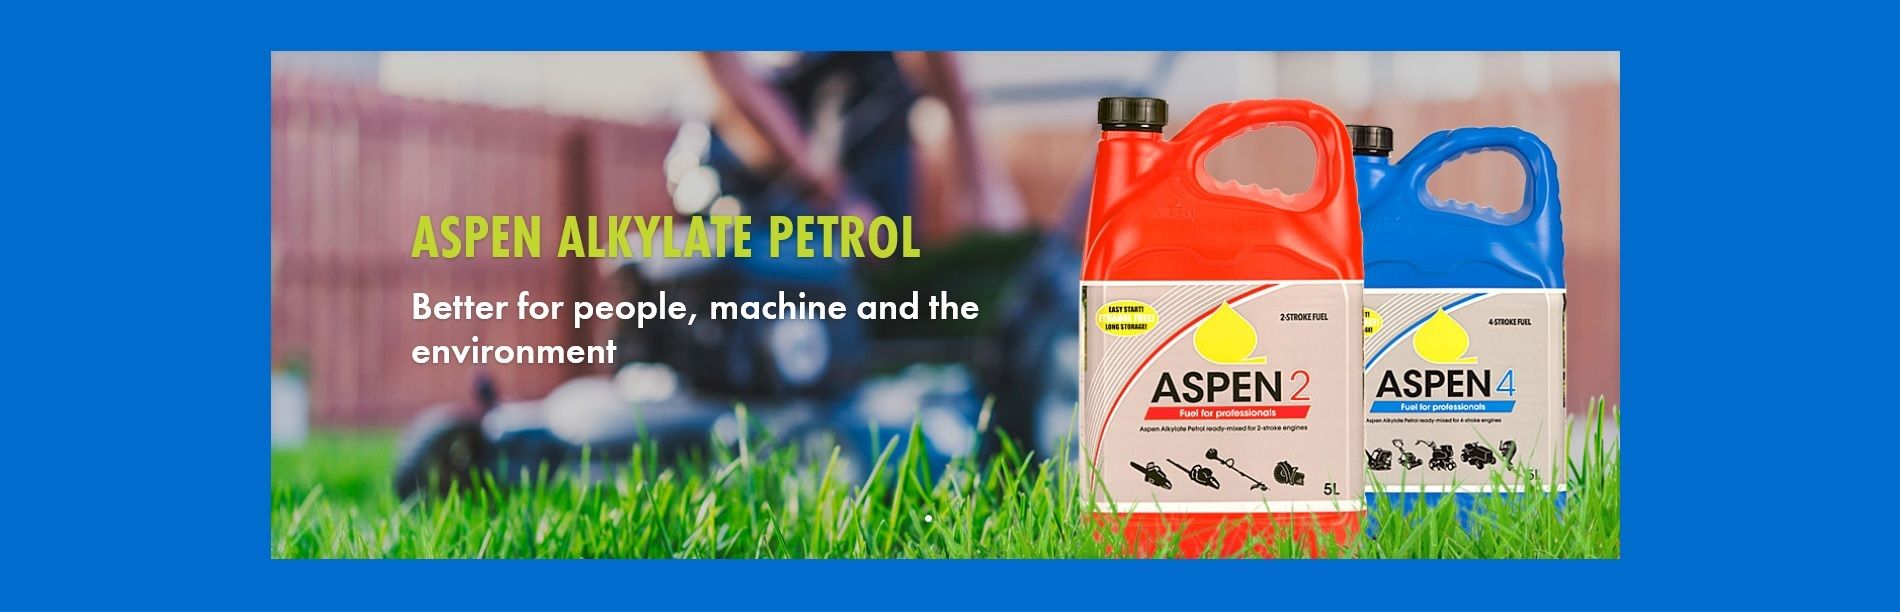 Aspen Fuels - Find Out More!